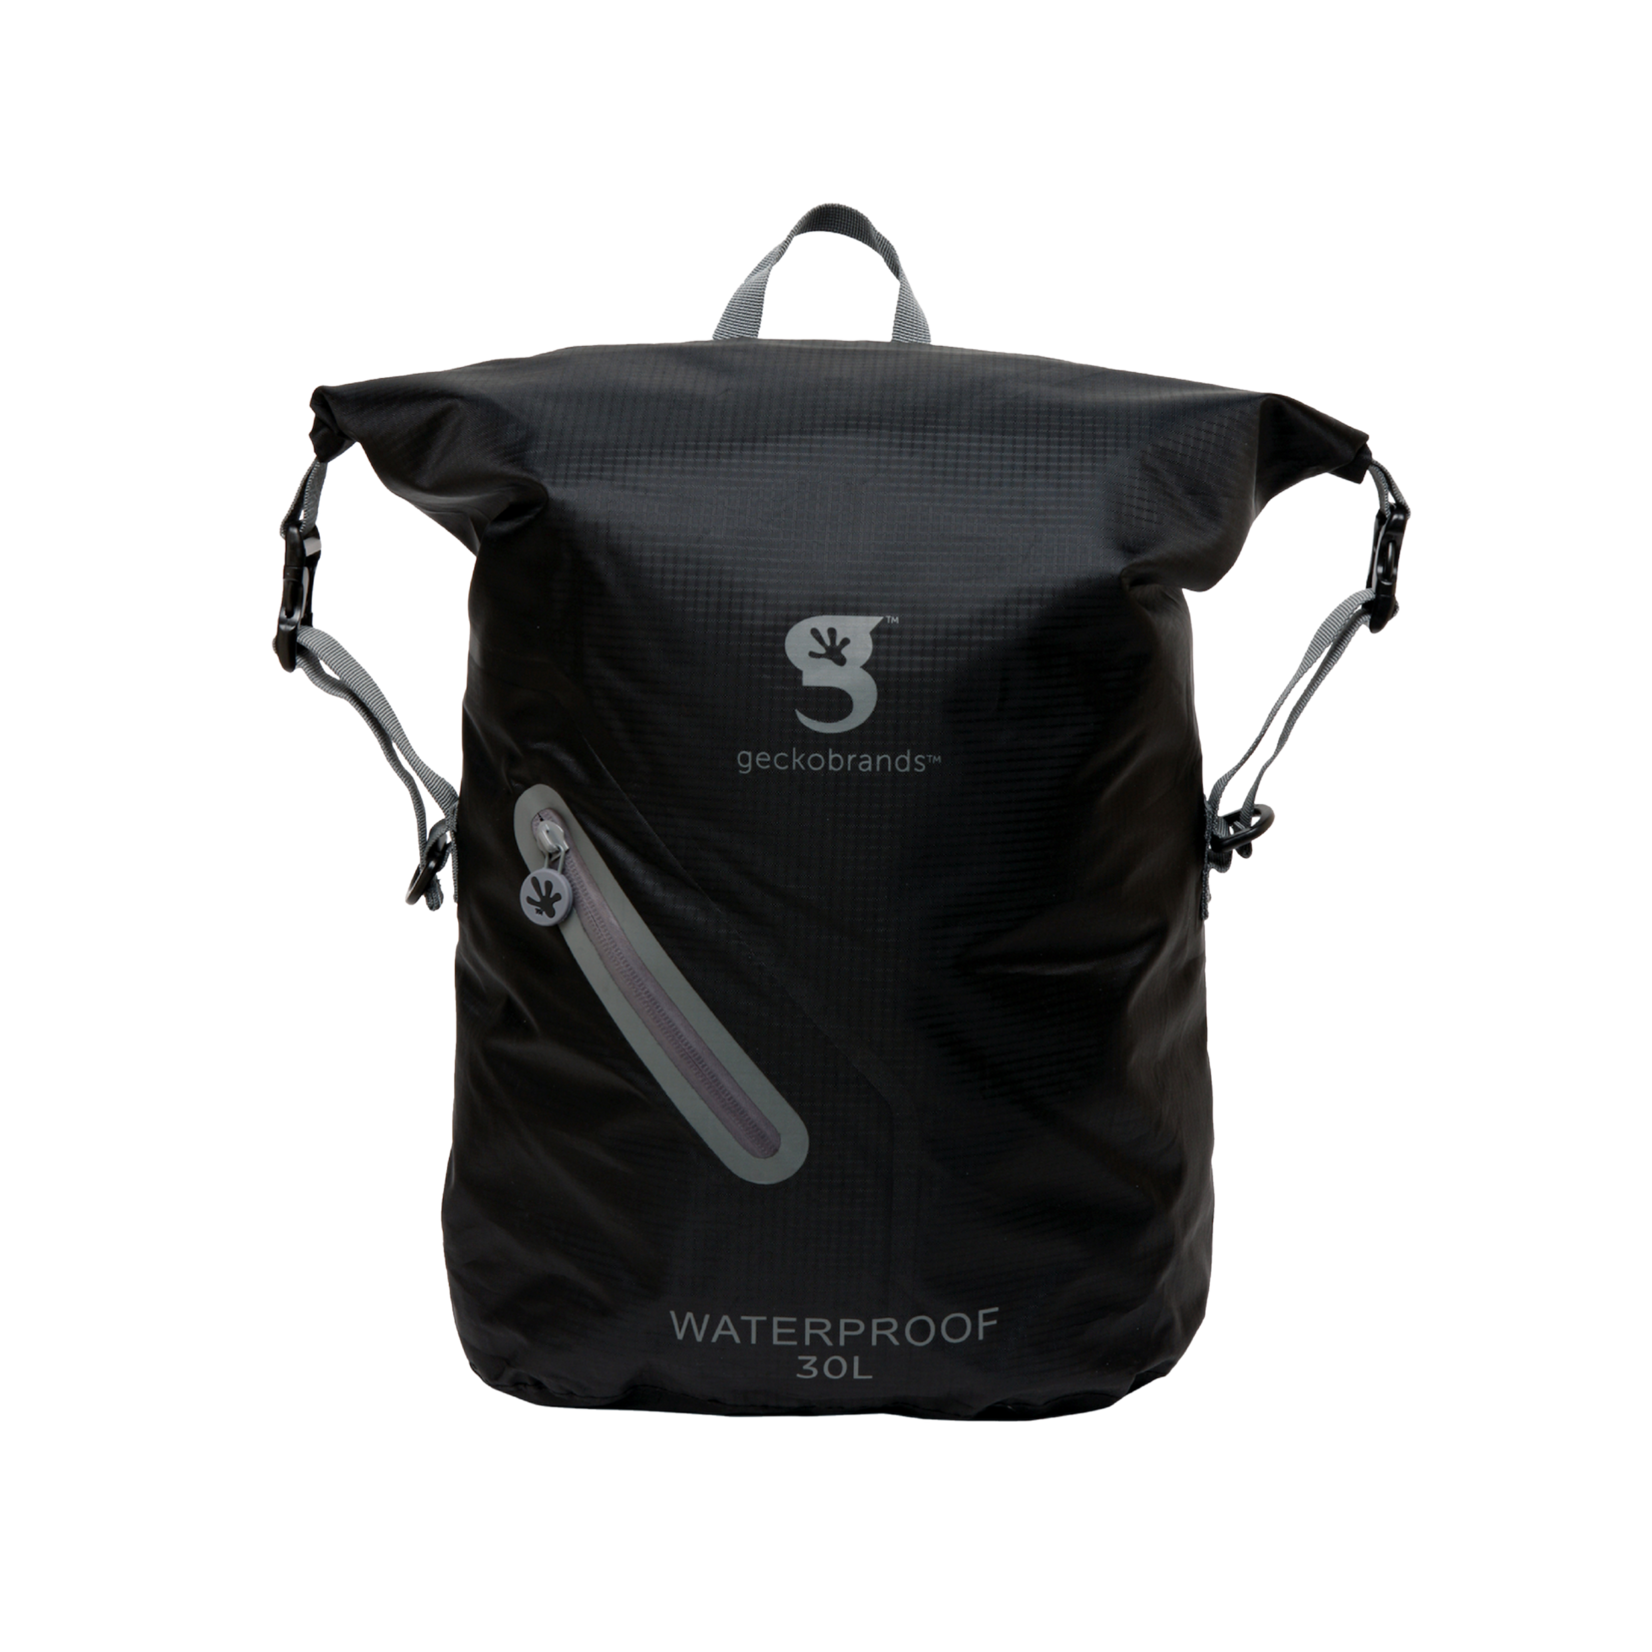 Geckobrands Waterproof Lightweight Backpack - Black /Grey